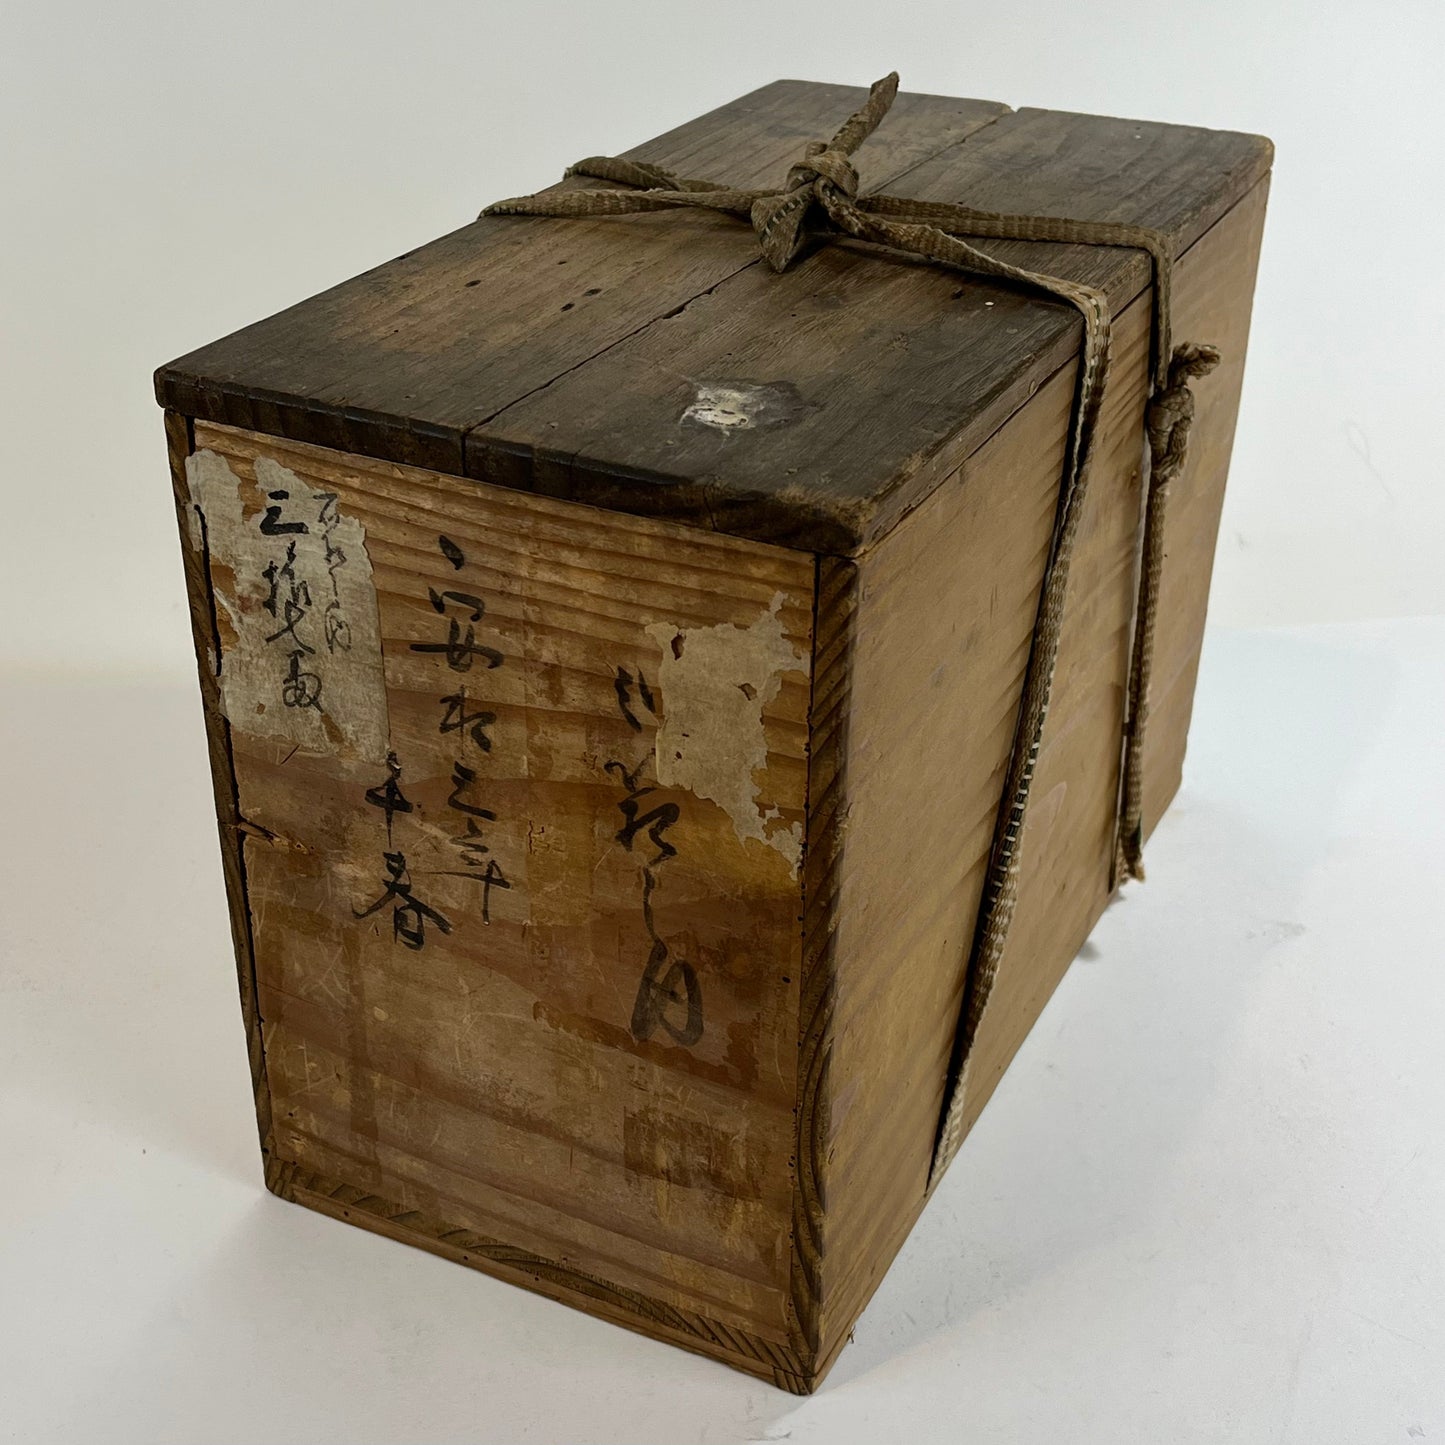 Antique Japanese Edo Era (Dated 1776) Black Lacquer Bowl (1) Gold Makie Turtles & Cranes 5.25"